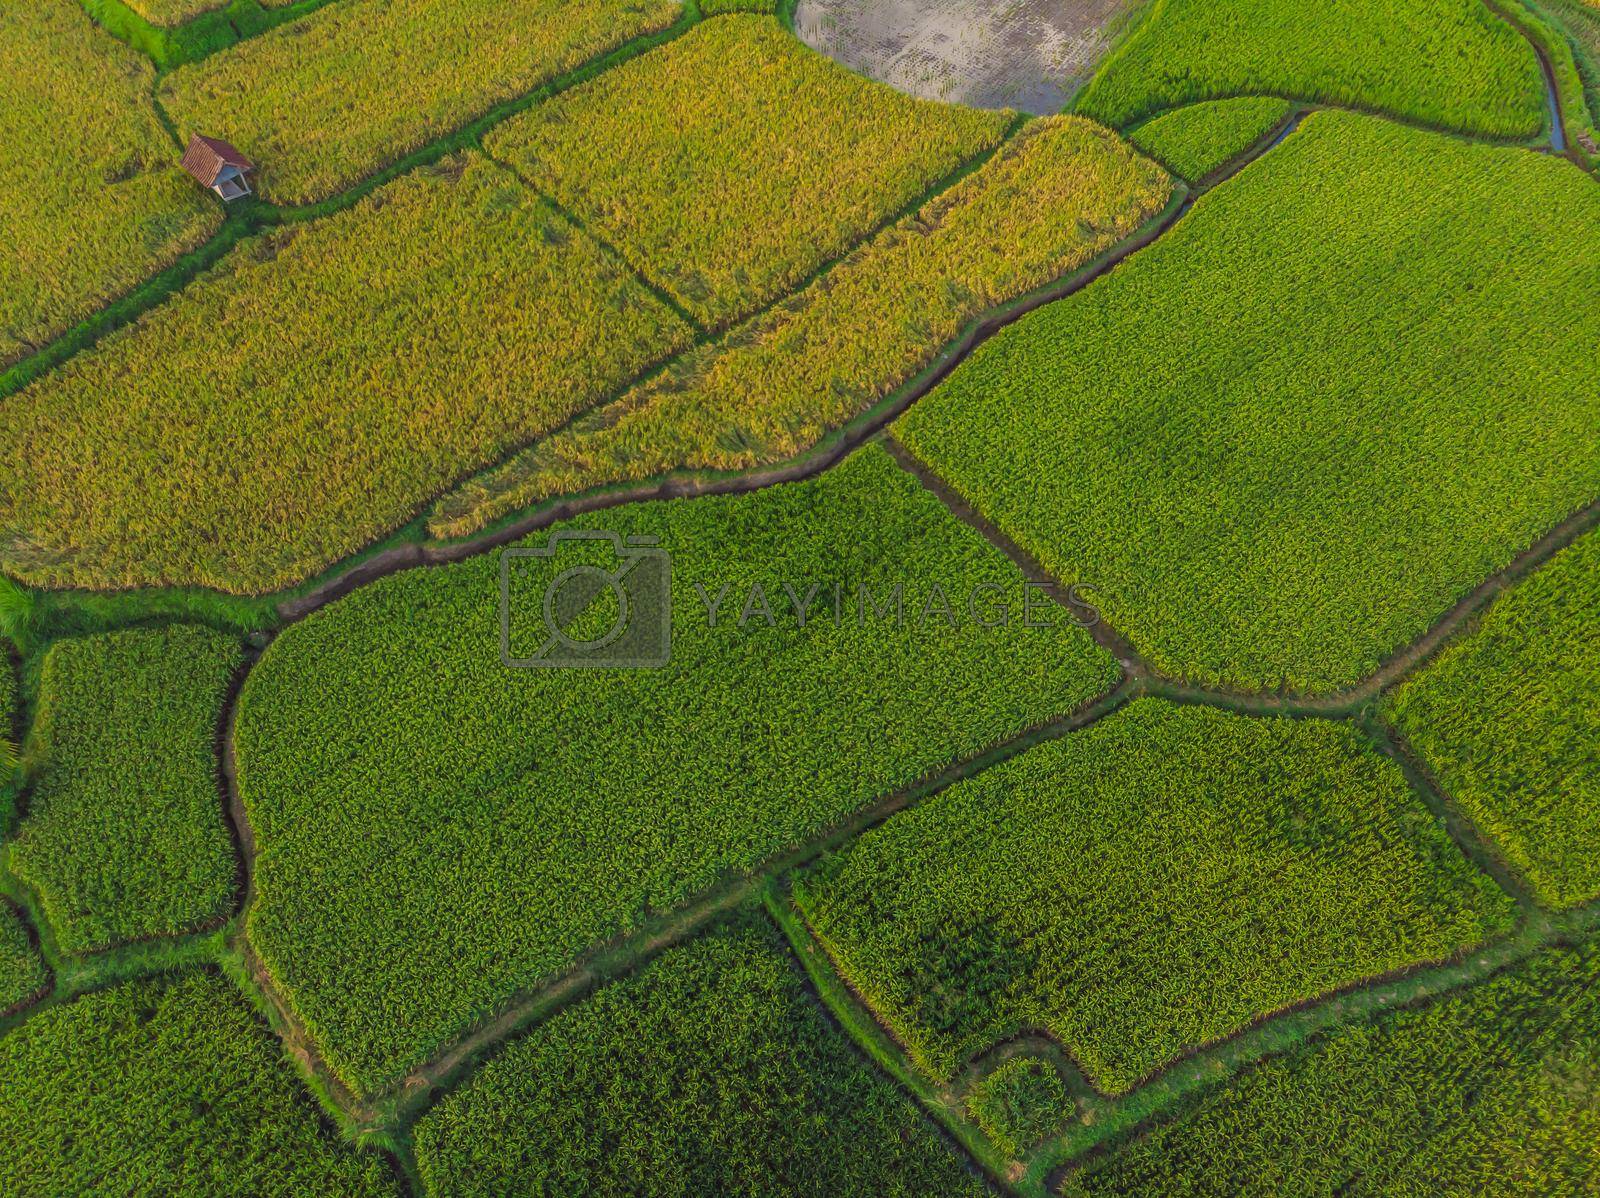 Royalty free image of Rice Terrace Aerial Shot. Image of beautiful terrace rice field by galitskaya